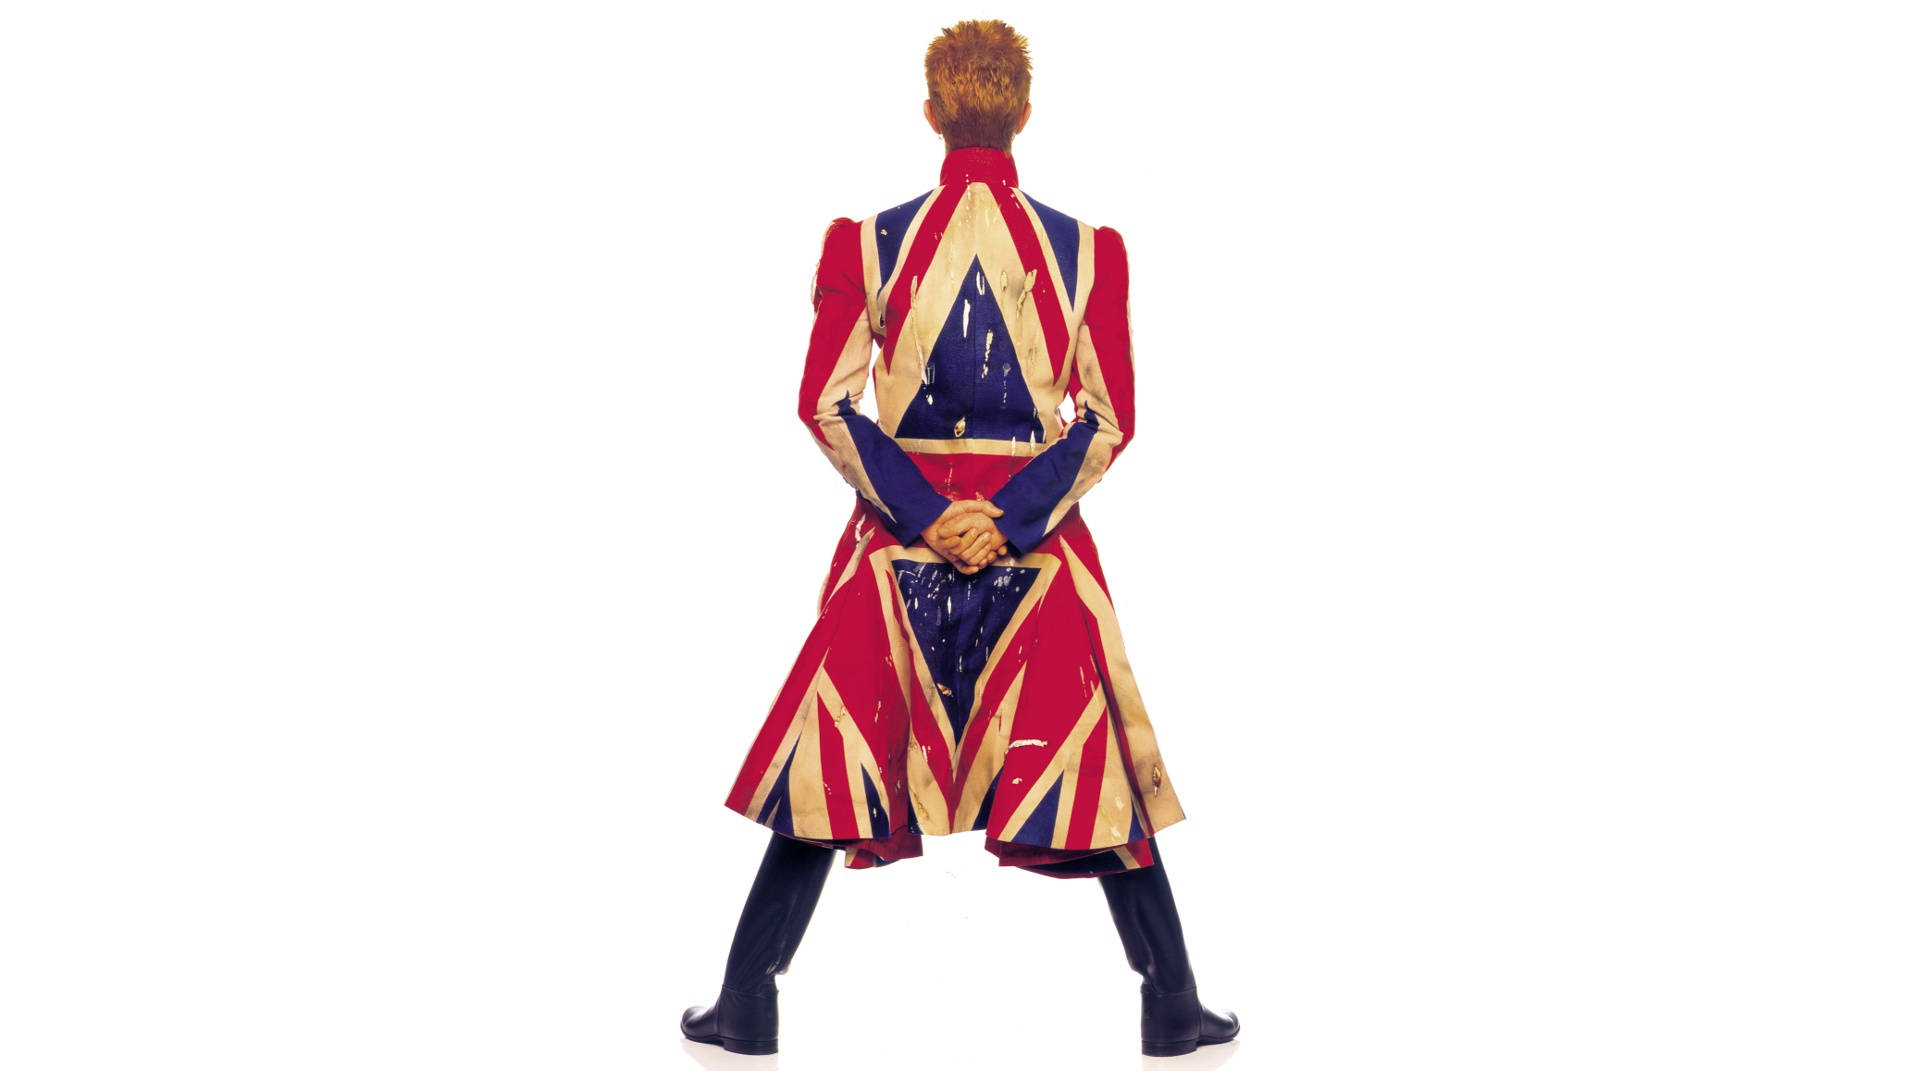 David Bowie Union Jack Coat Background